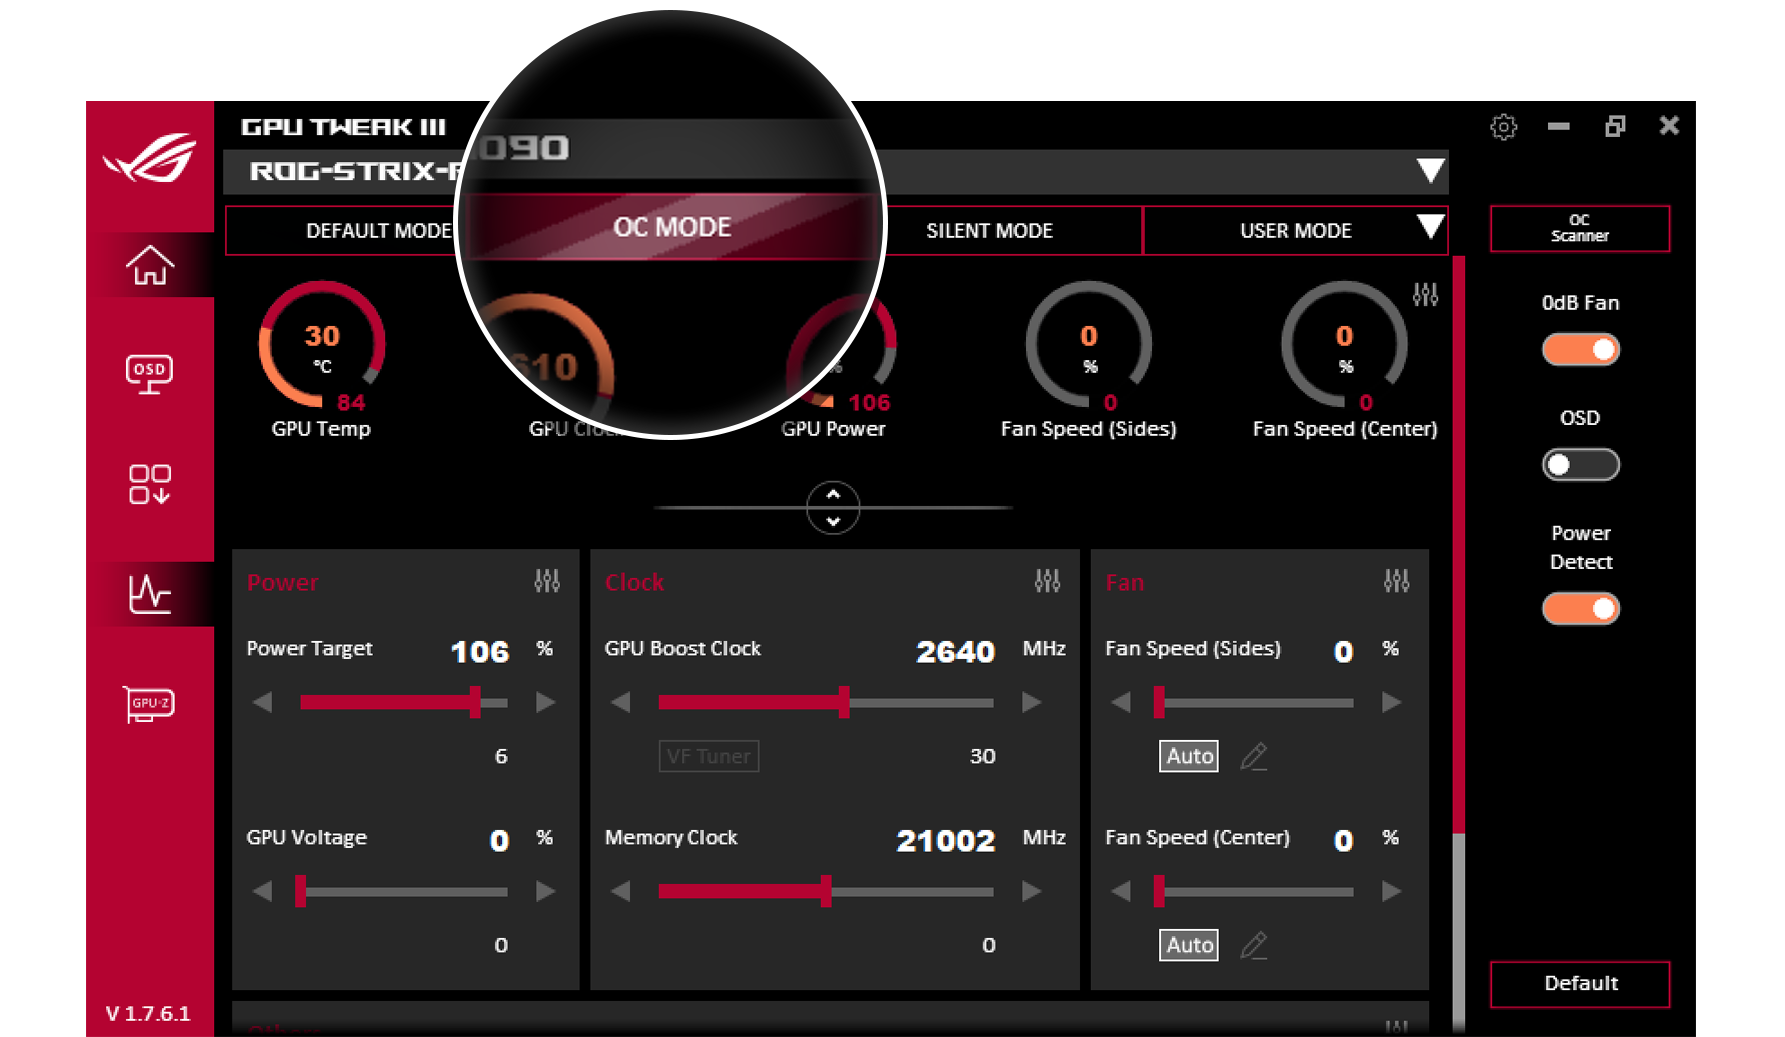 ASUS GPU Tweak III overclock OC mode interface